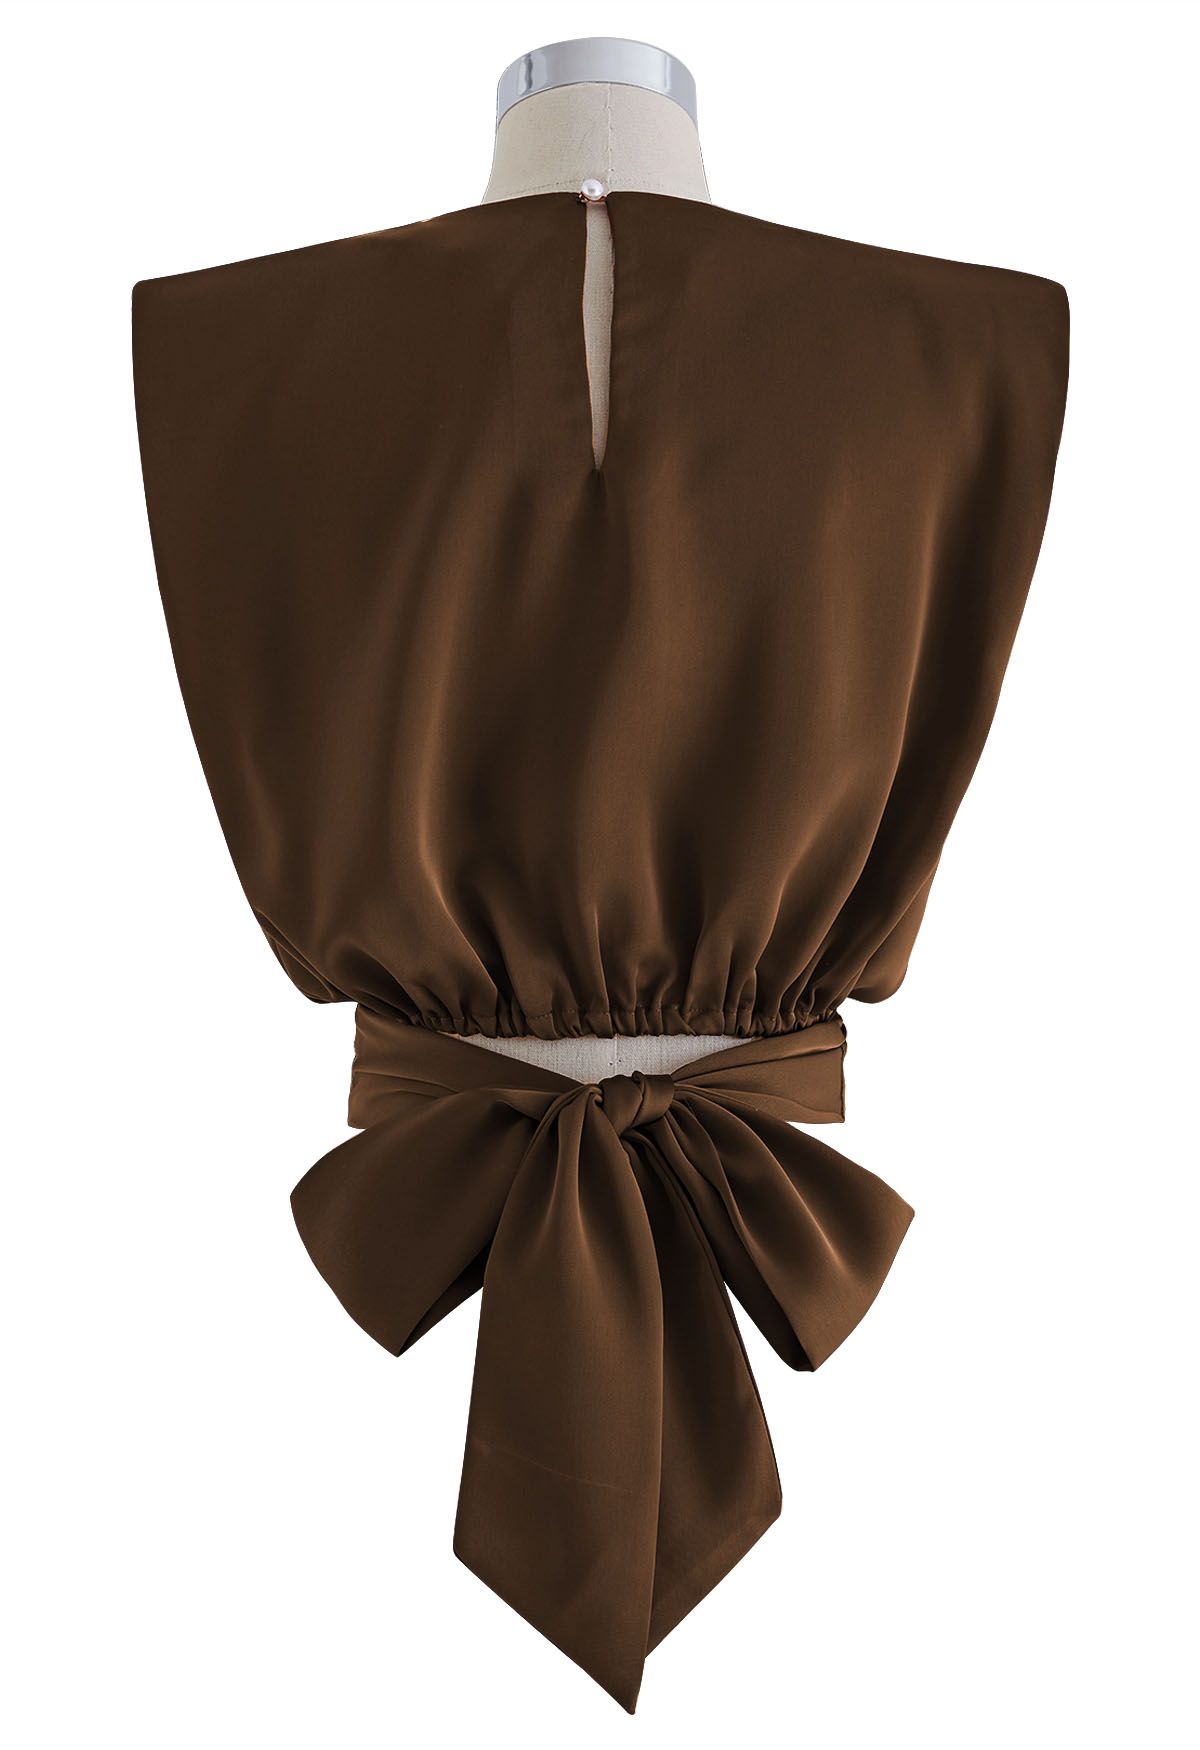 Satin Tie Back Sleeveless Top in Brown